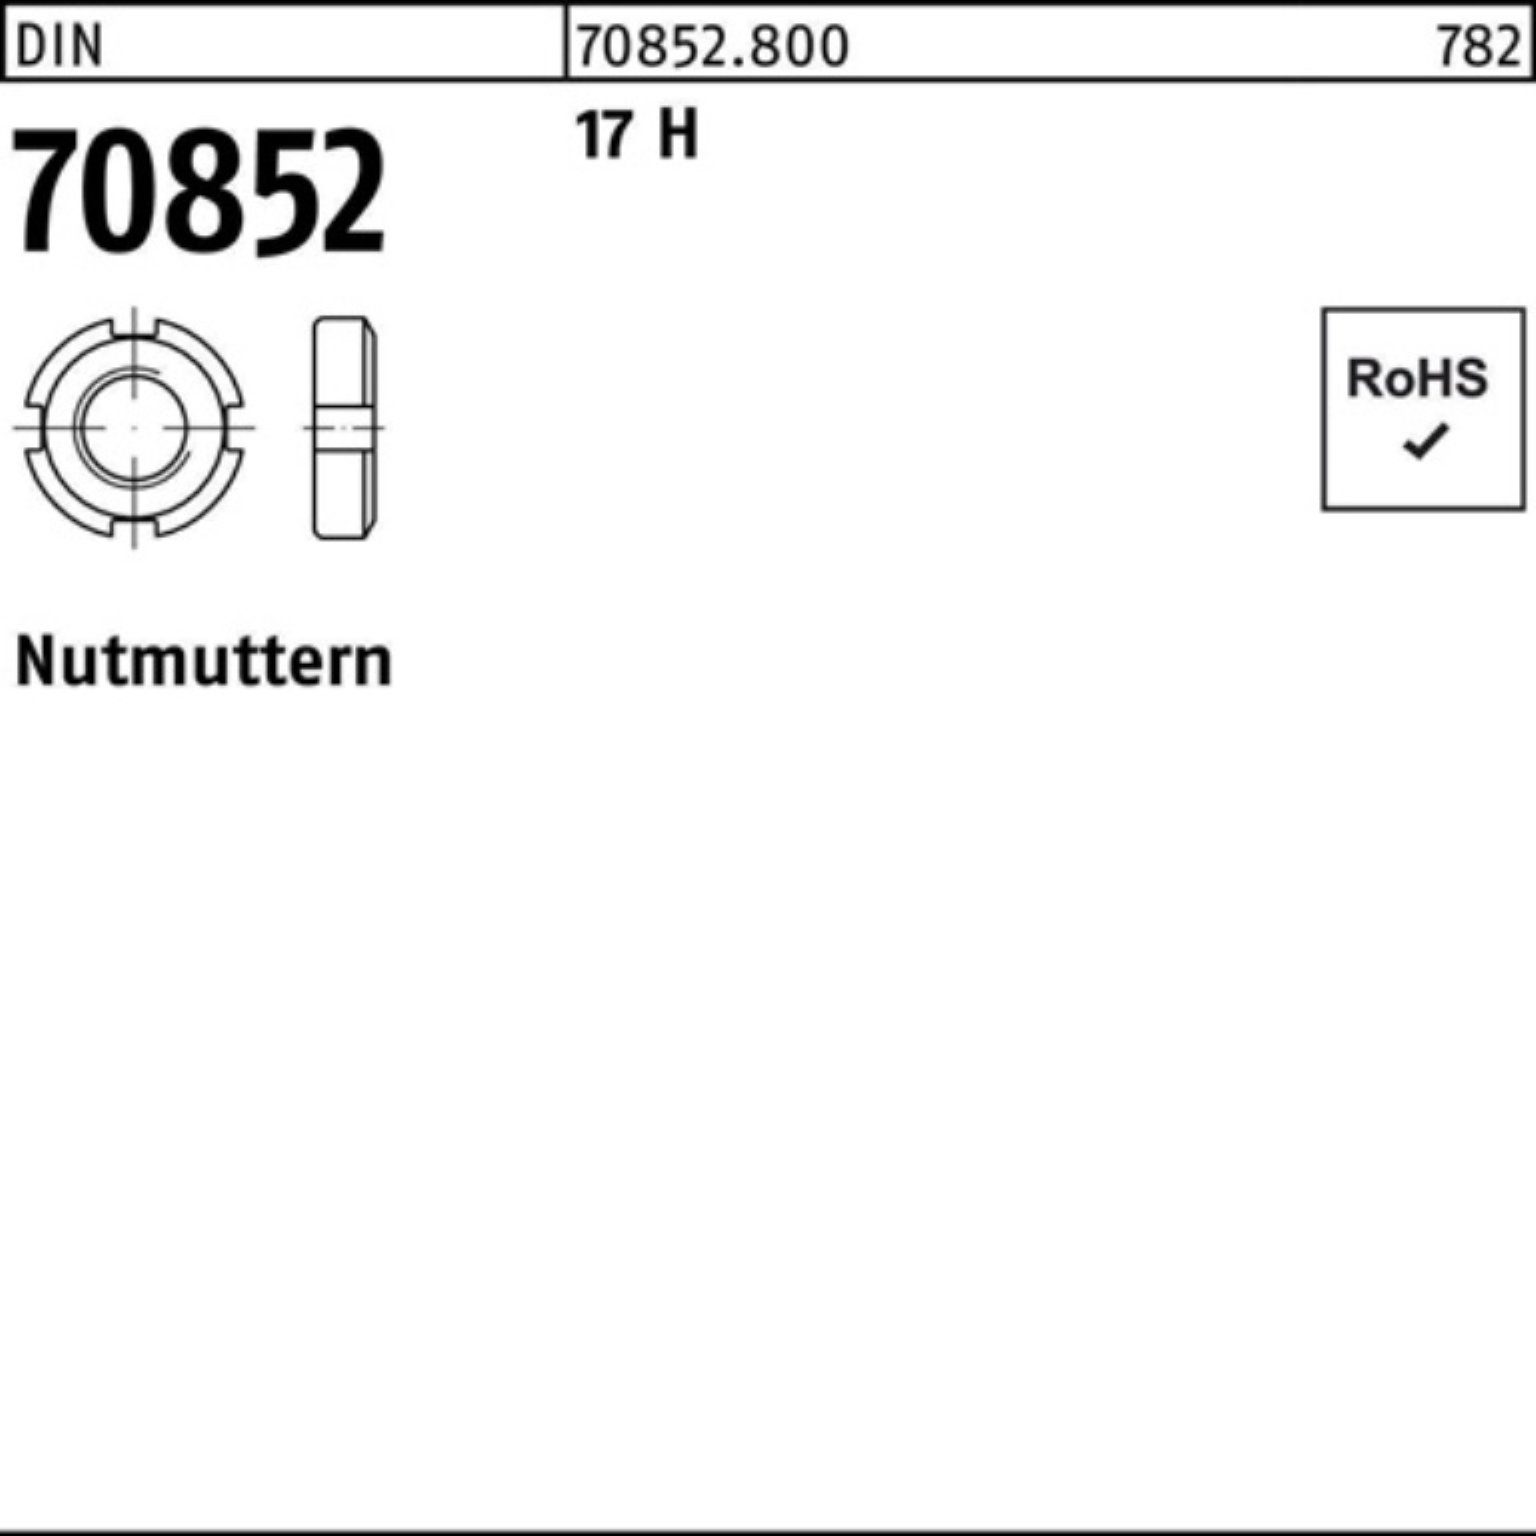 Reyher Nutmutter 100er Pack Nutmutter DIN 70852 M80x 1,5 17 H 1 Stück DIN 70852 17 H N | Muttern